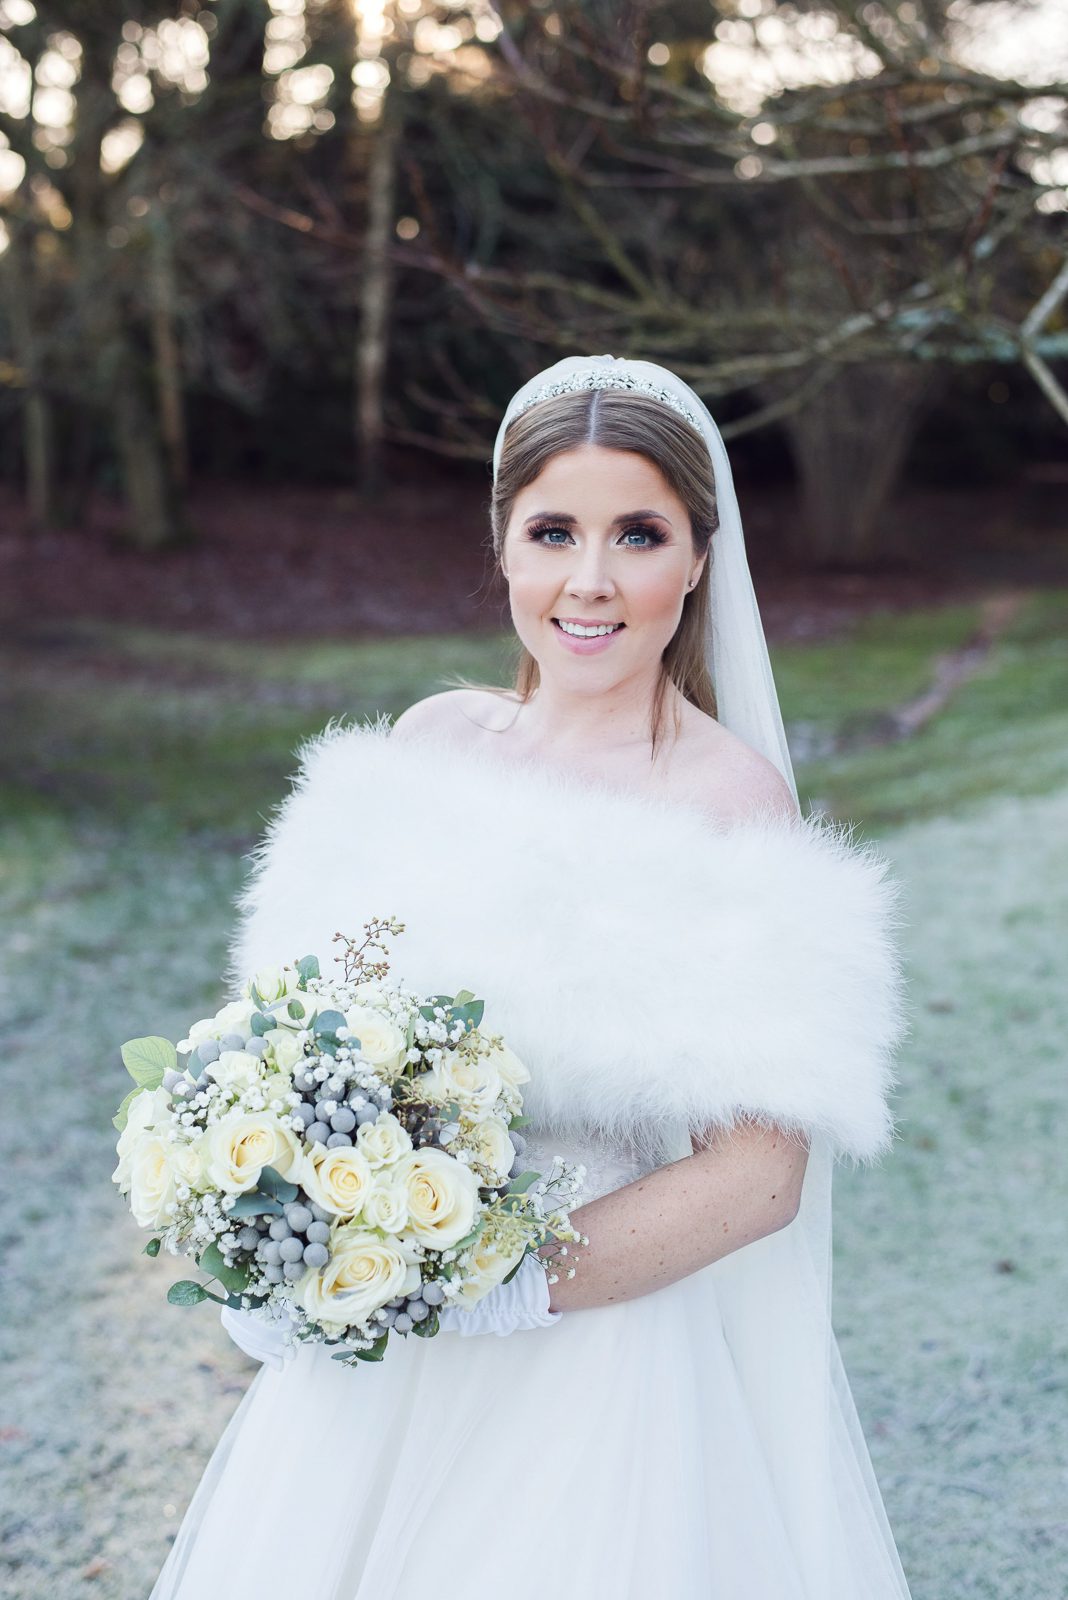 Winter bride at a frosty December wedding in Surrey